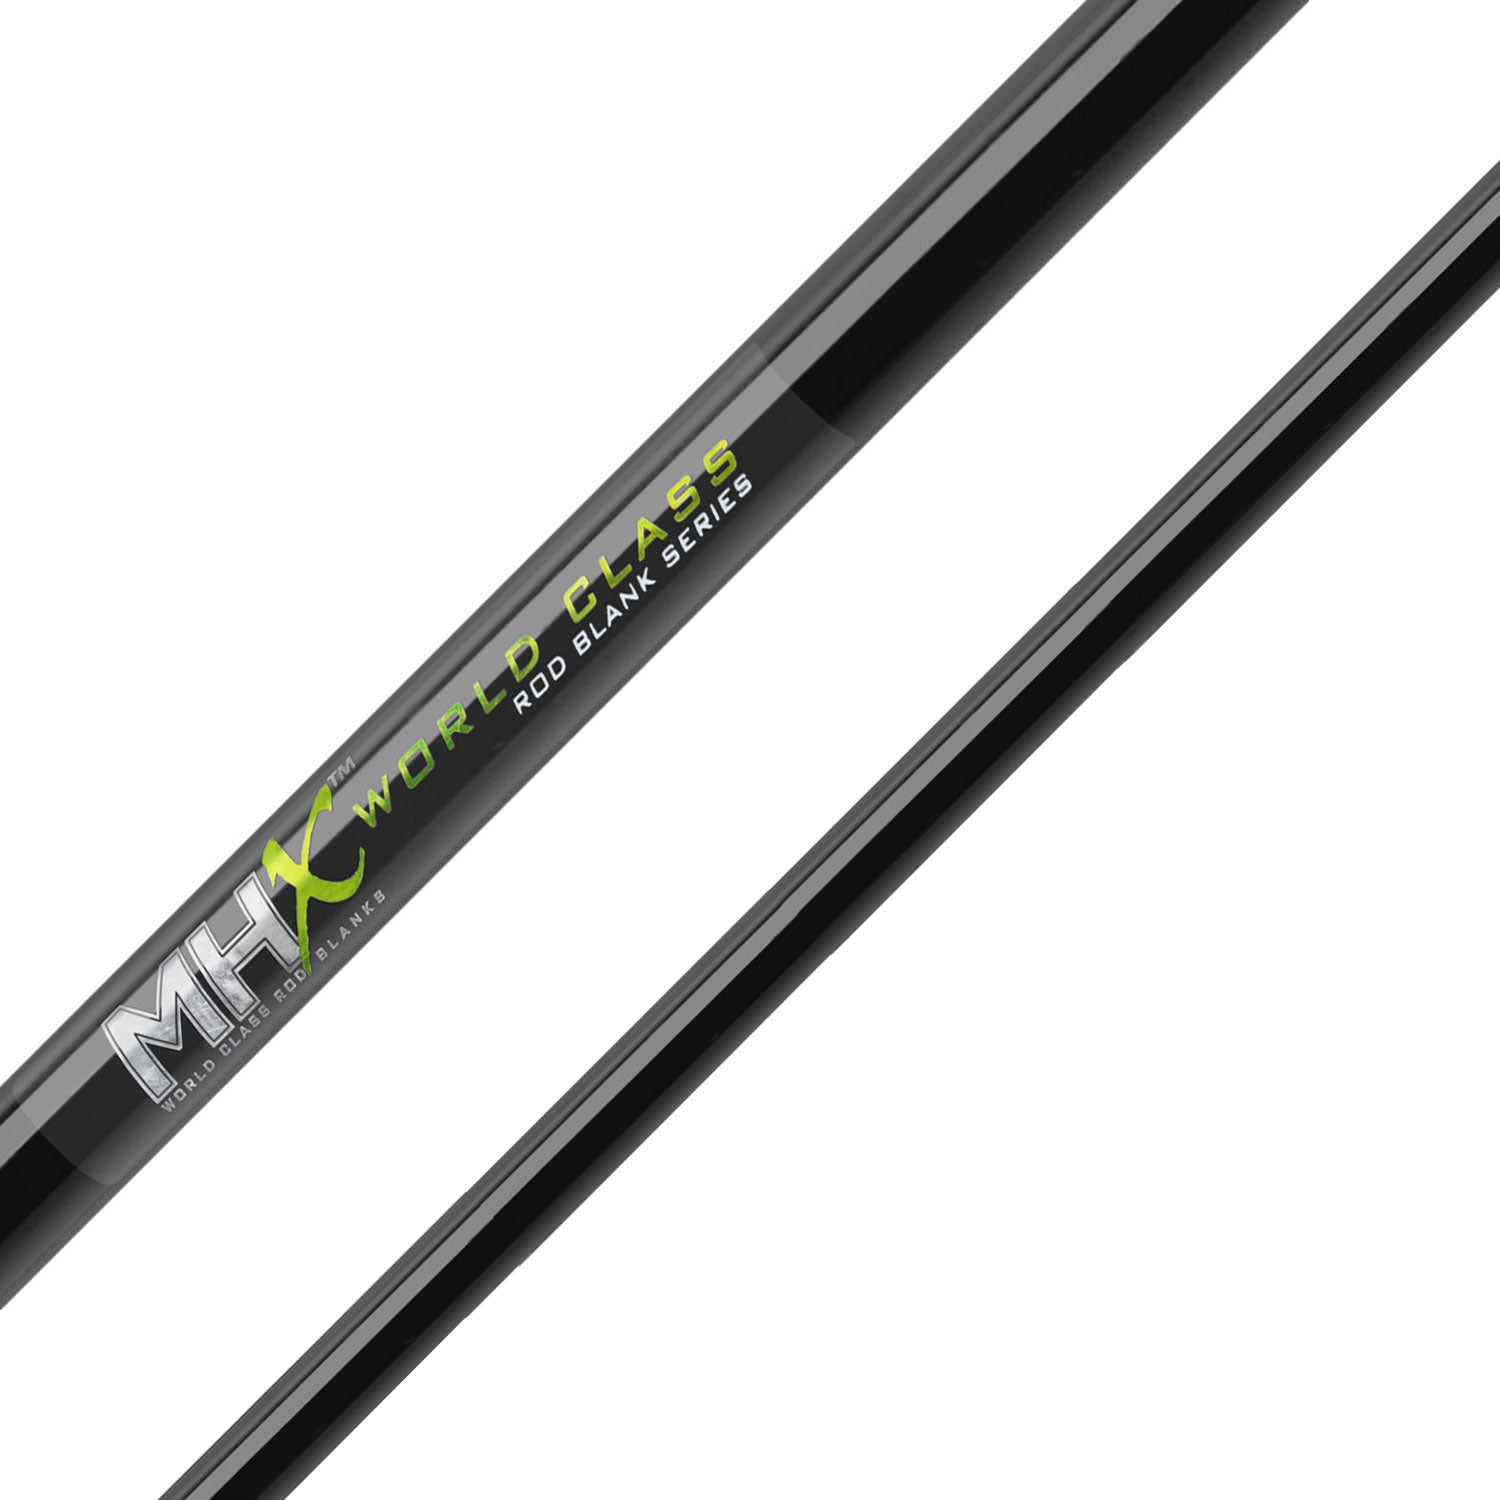 MHX 10'6" X-Heavy X-Glass Downrigger Rod Blank - DR1266-MHX